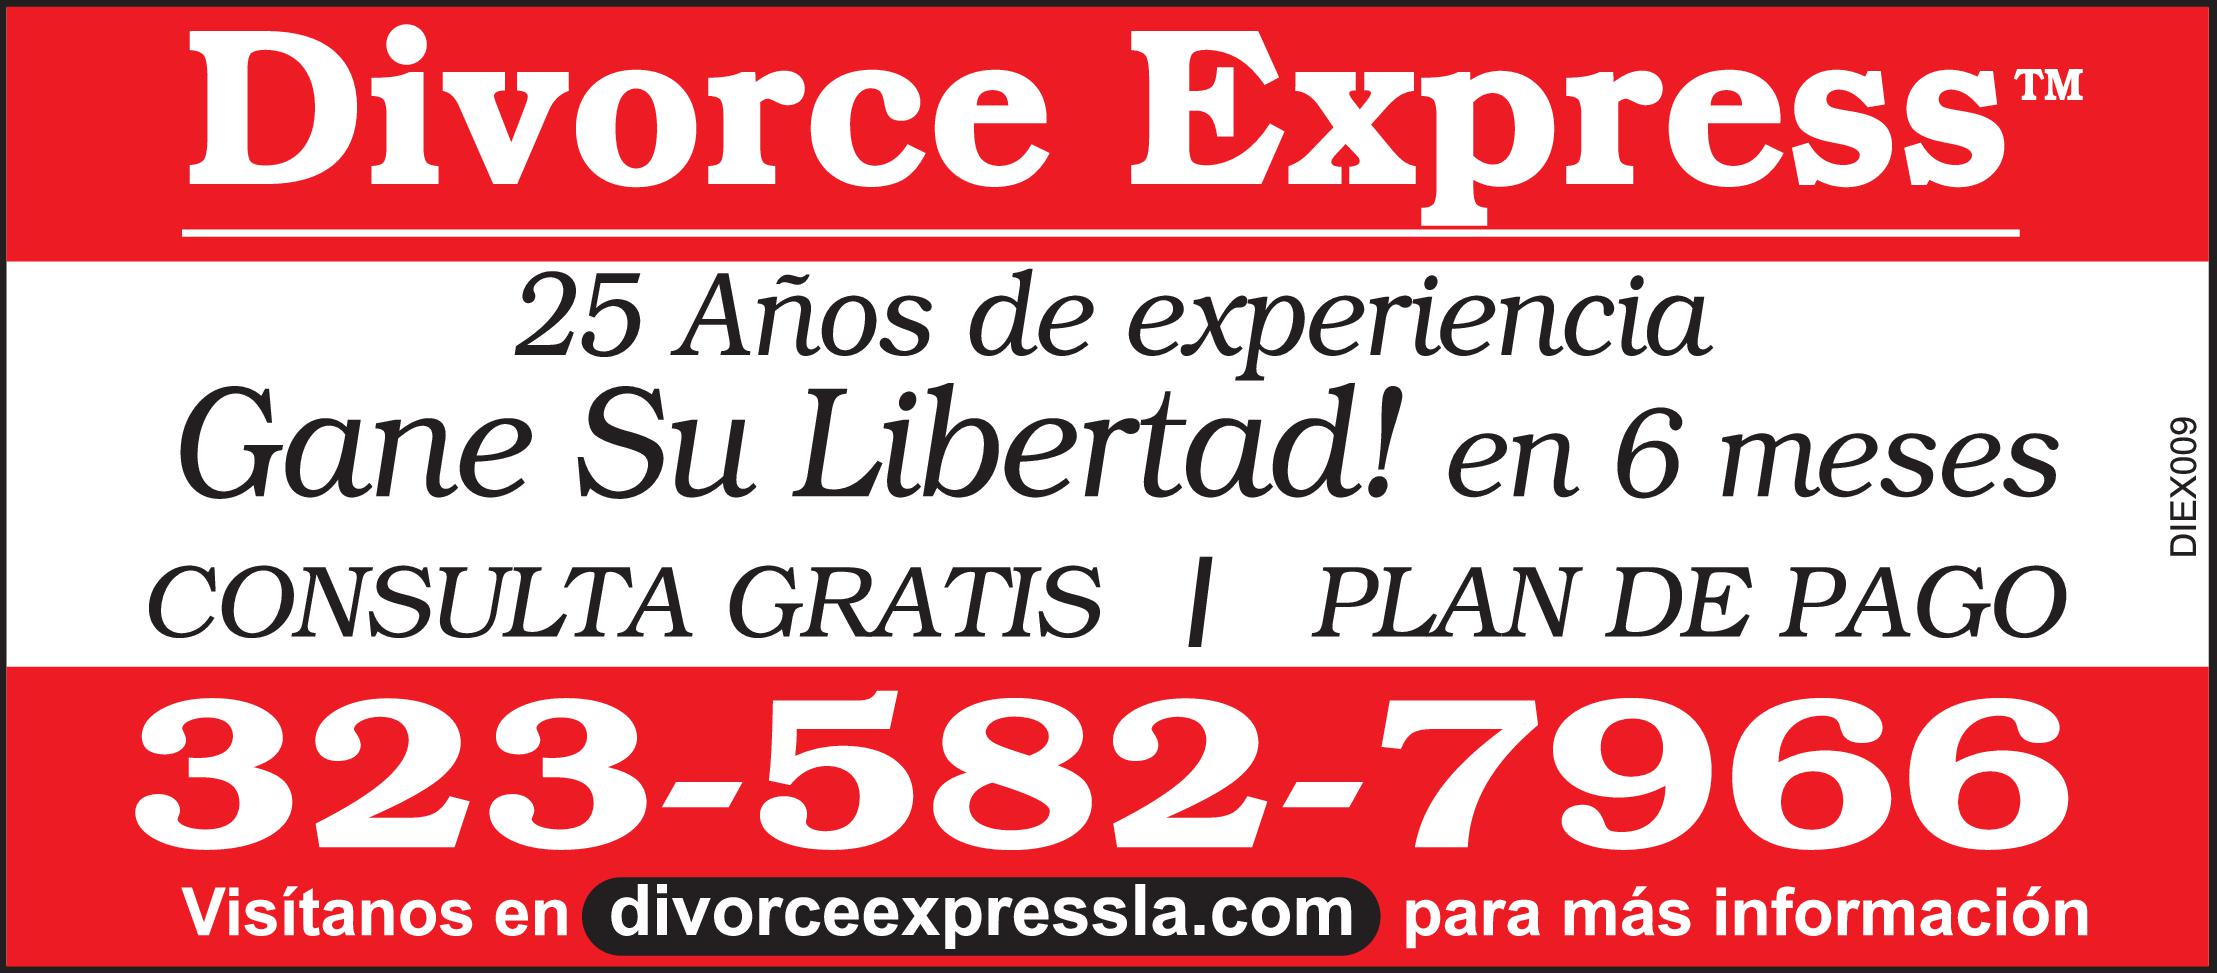 Divorce Express Inc.